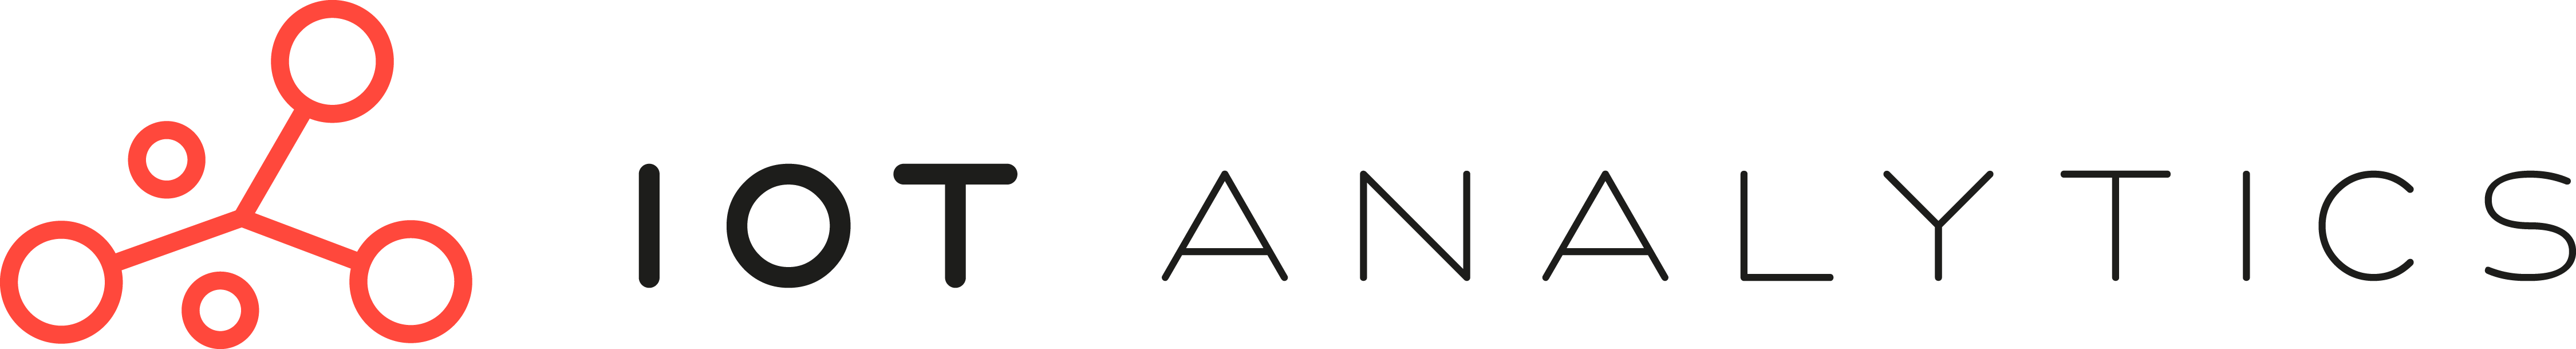 IoT Analytics Logo Wide Small